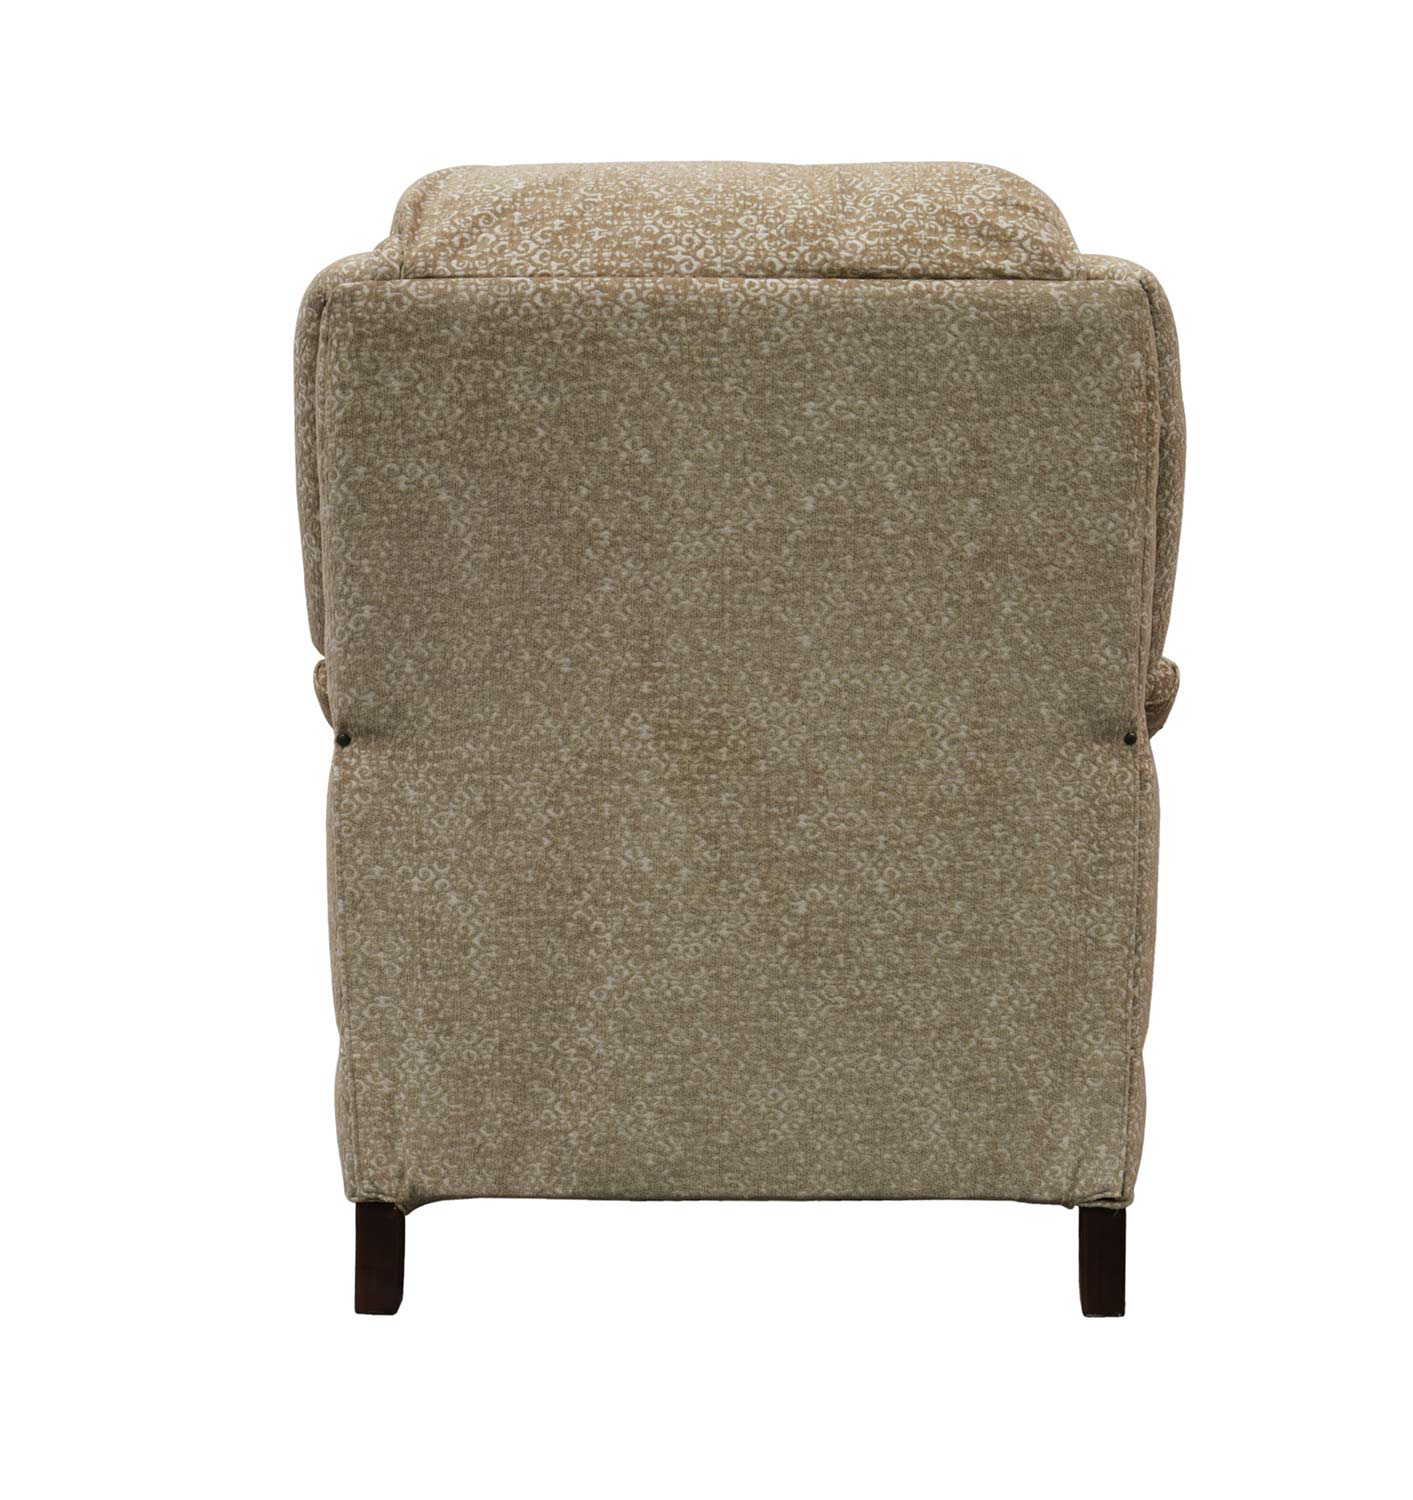 Barcalounger Ashebrooke Recliner Chair - Sandcastle/fabric